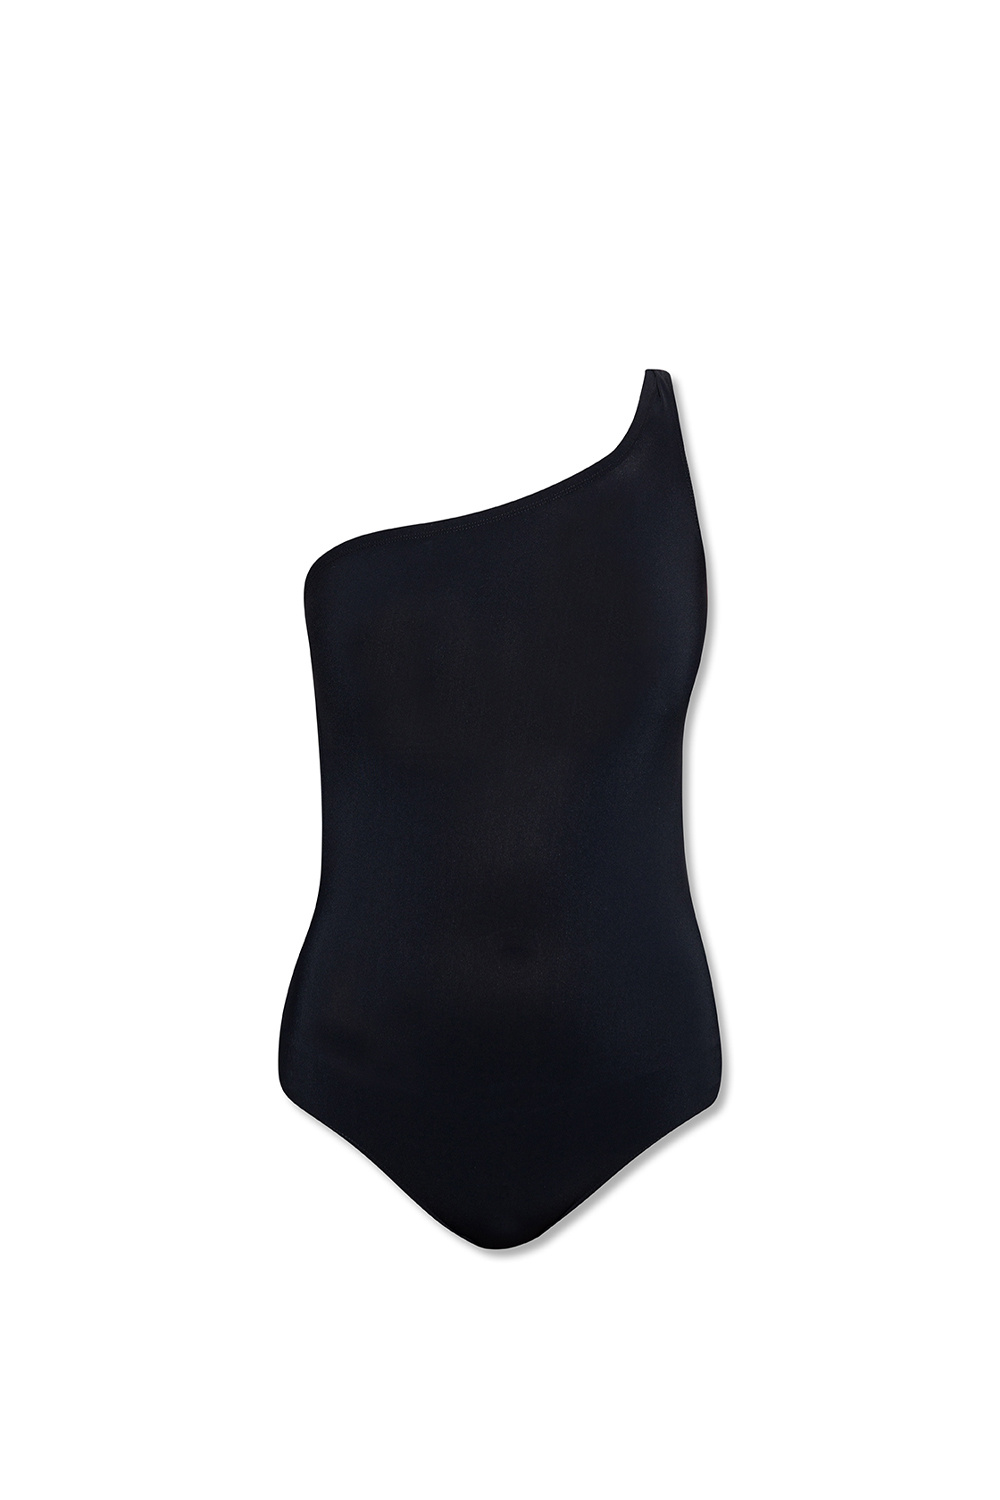 Isabel Marant One-piece swimsuit